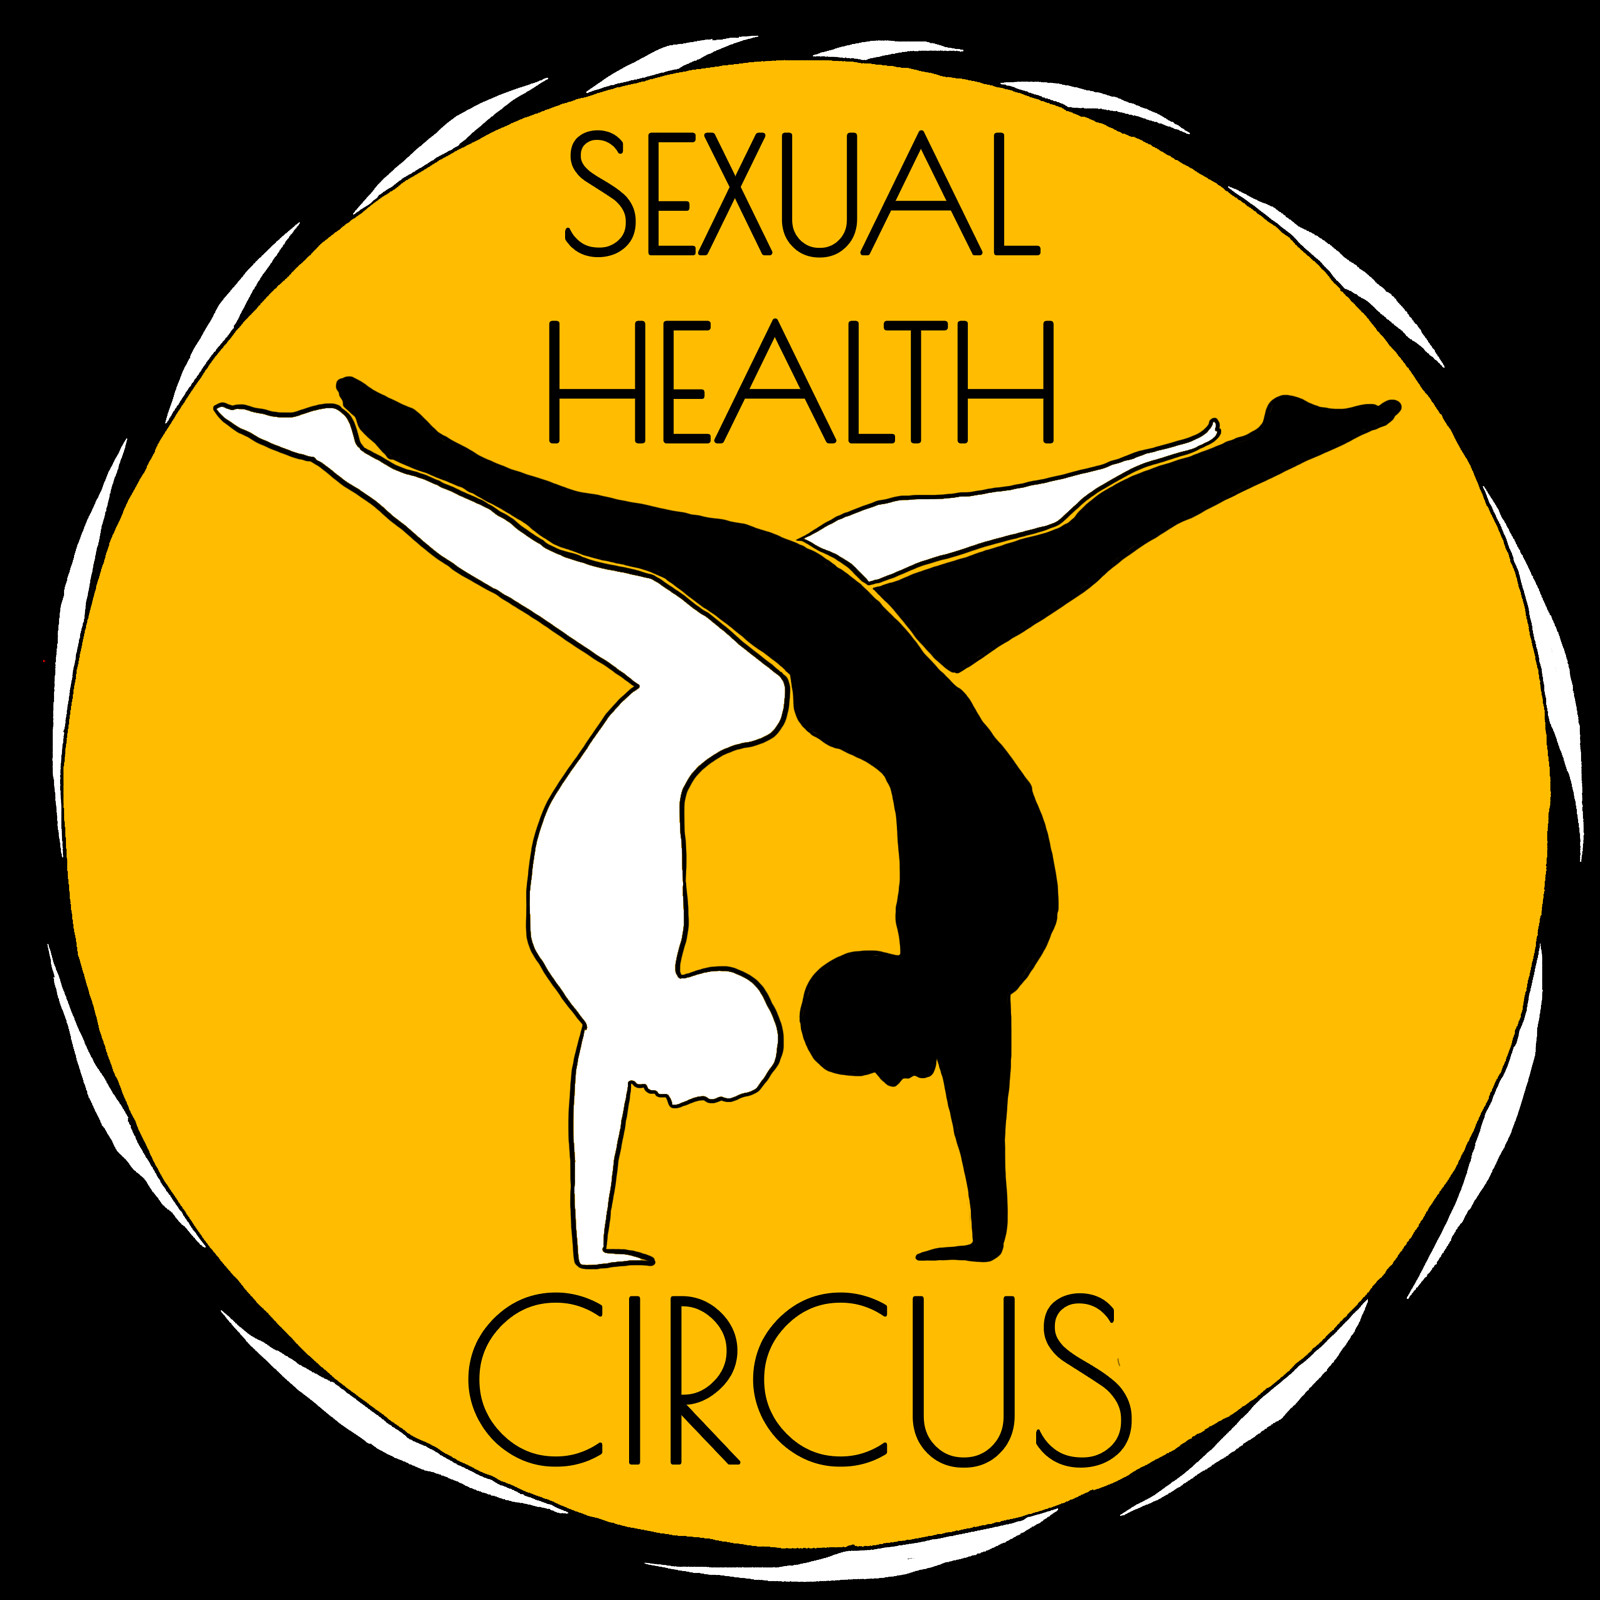 Sexual Health Circus at Ashton Court